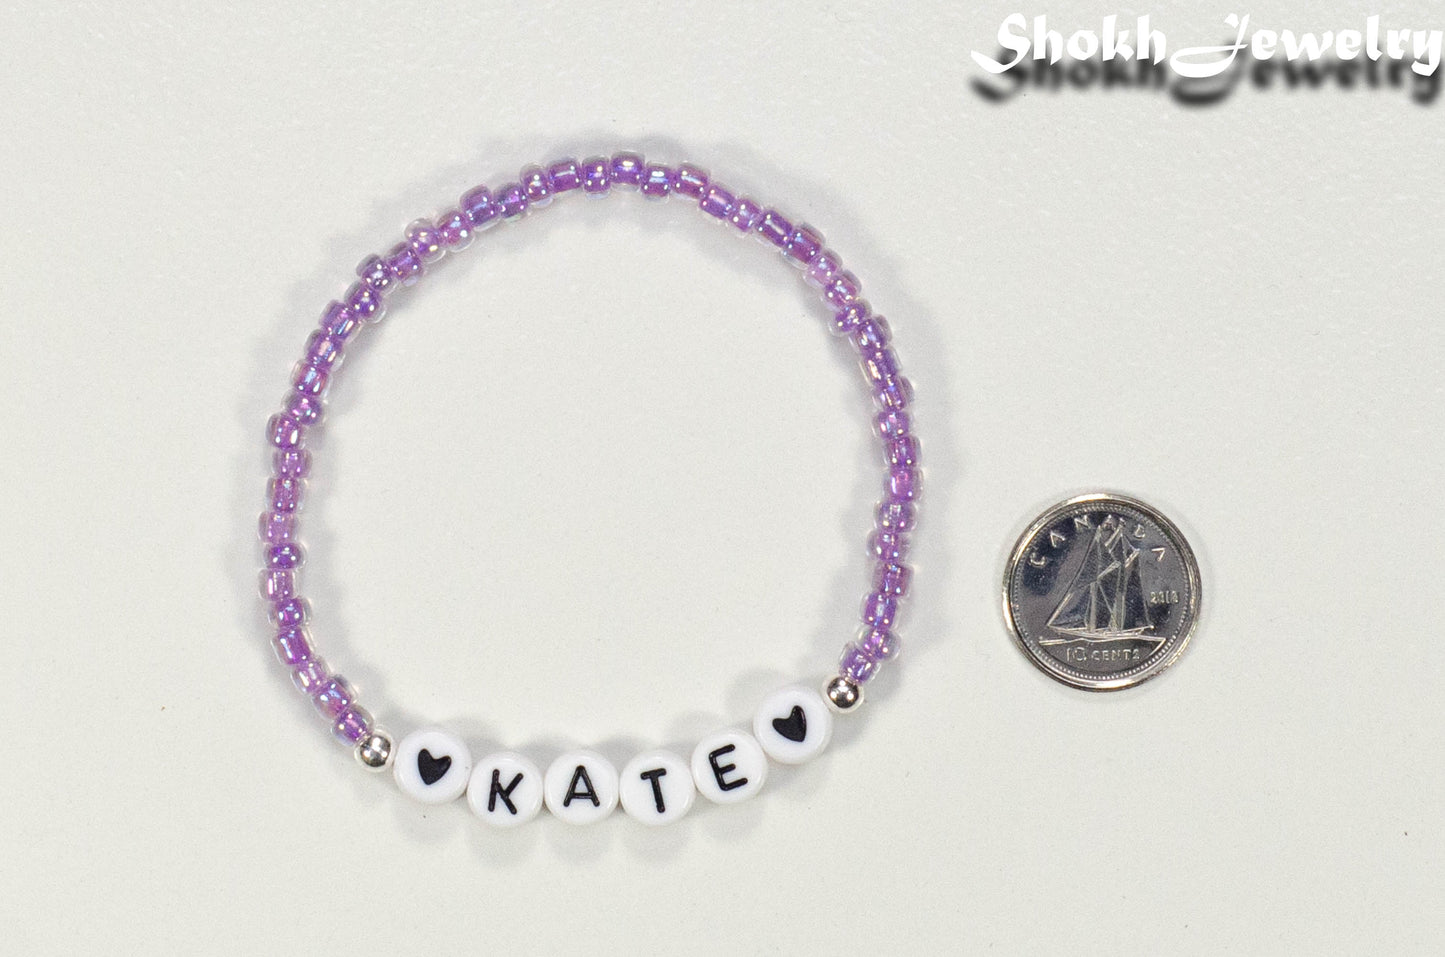 Purple Seed Beads Name Bracelet beside a dime.